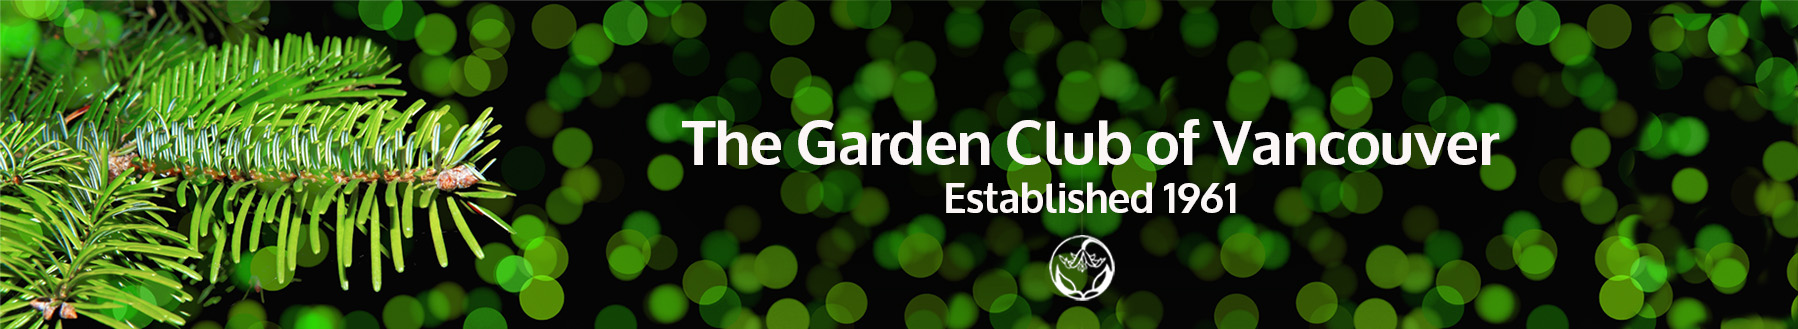 The Garden Club of Vancouver